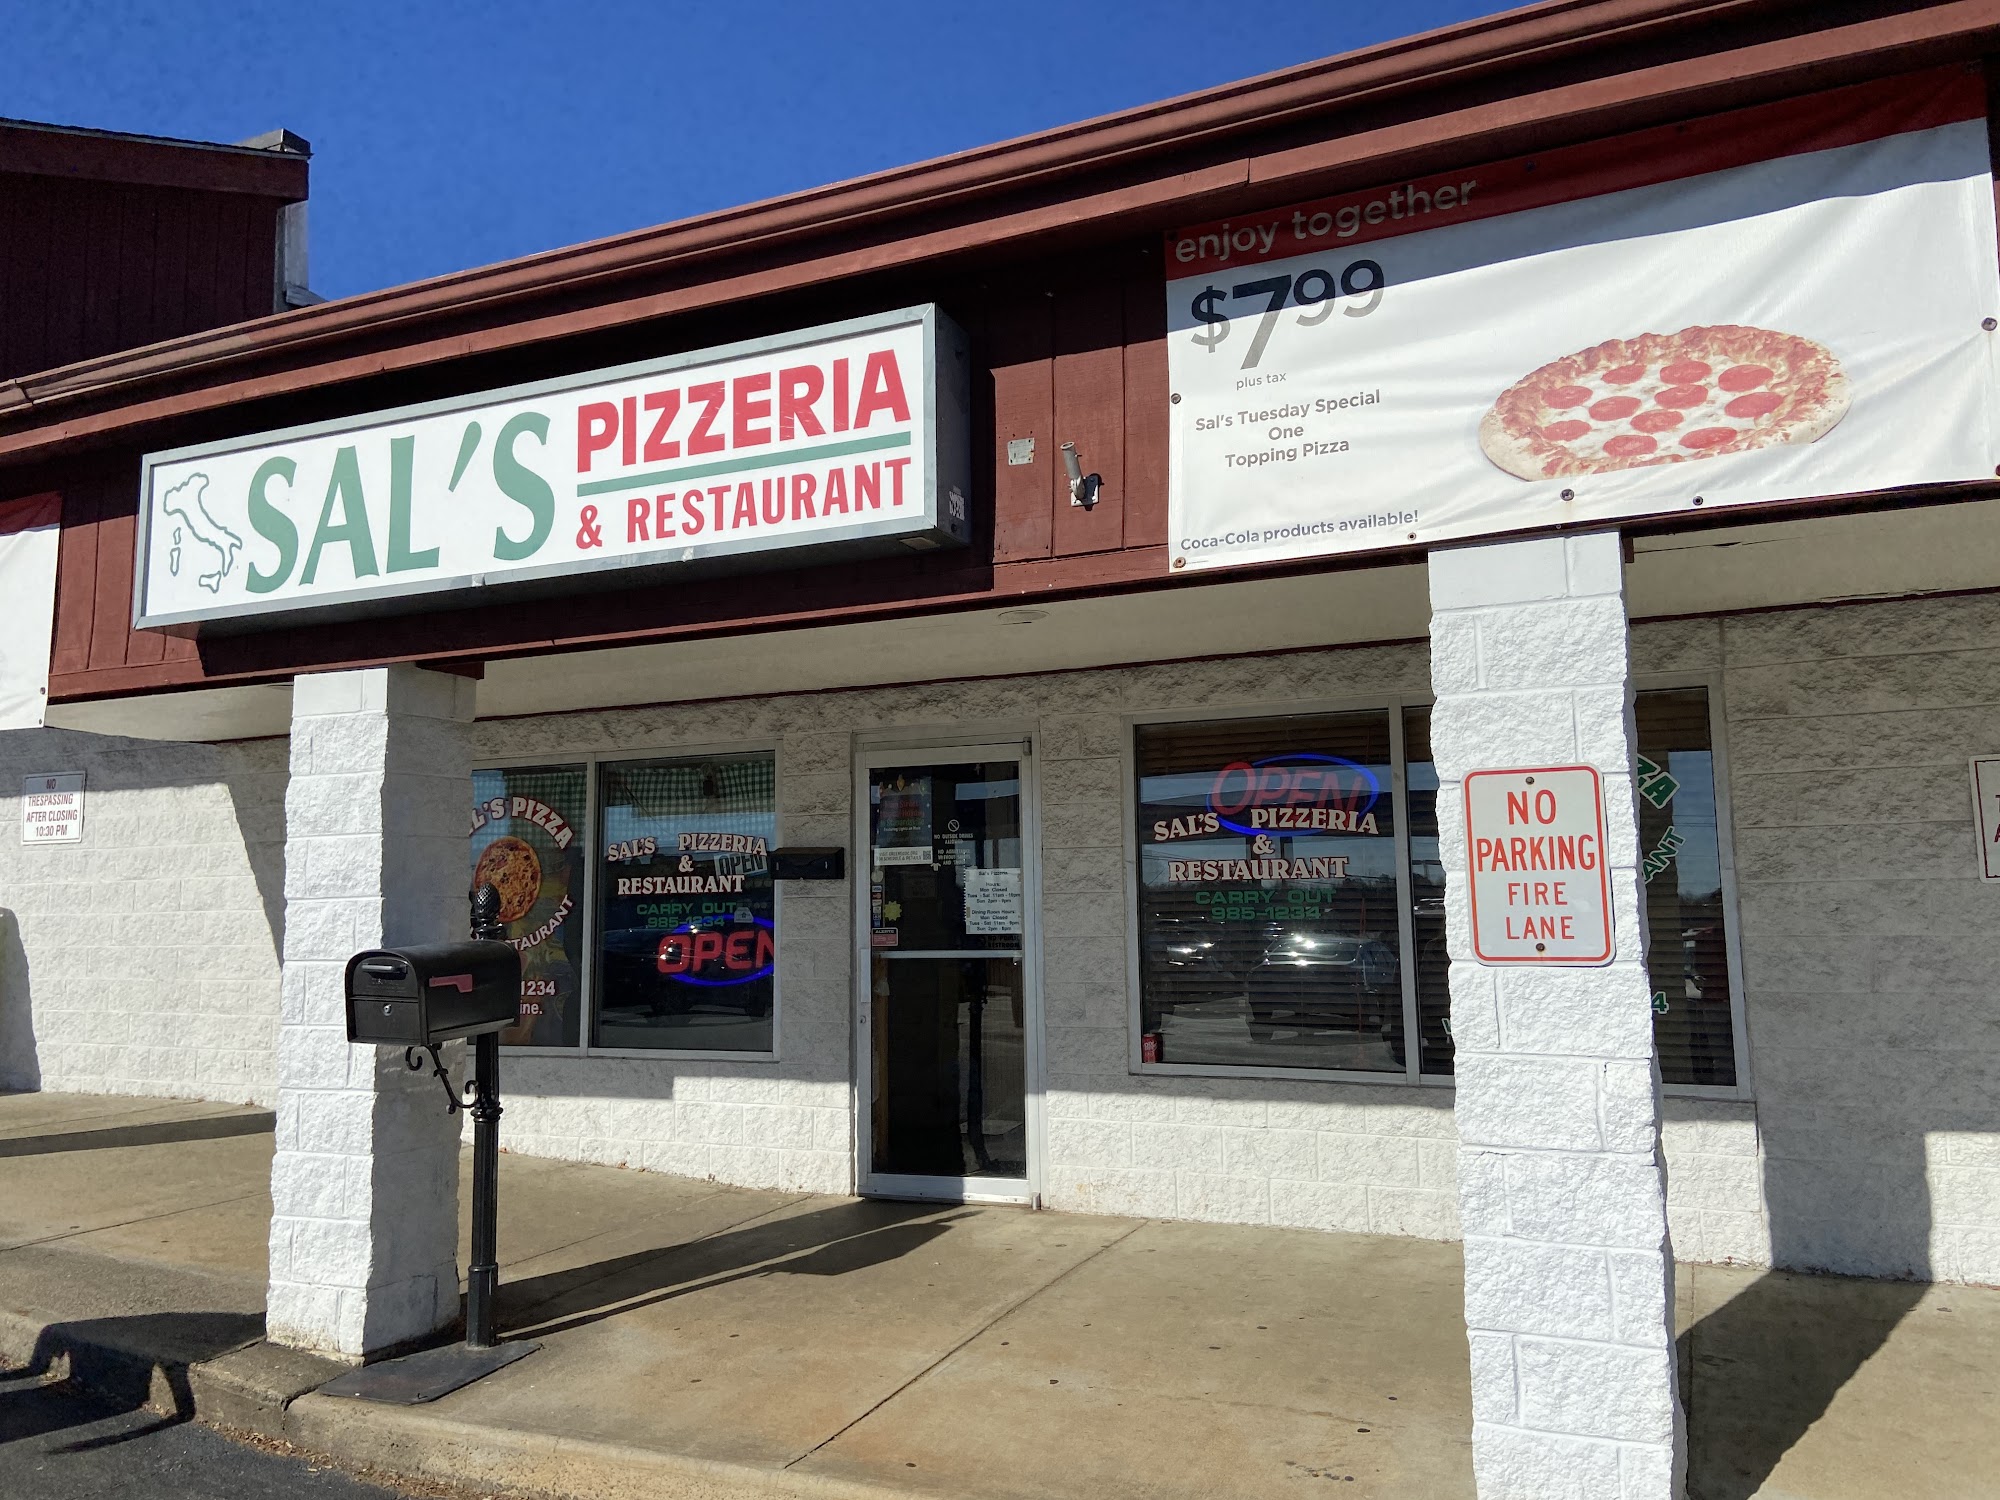 Sal's Pizzeria and Restaurant